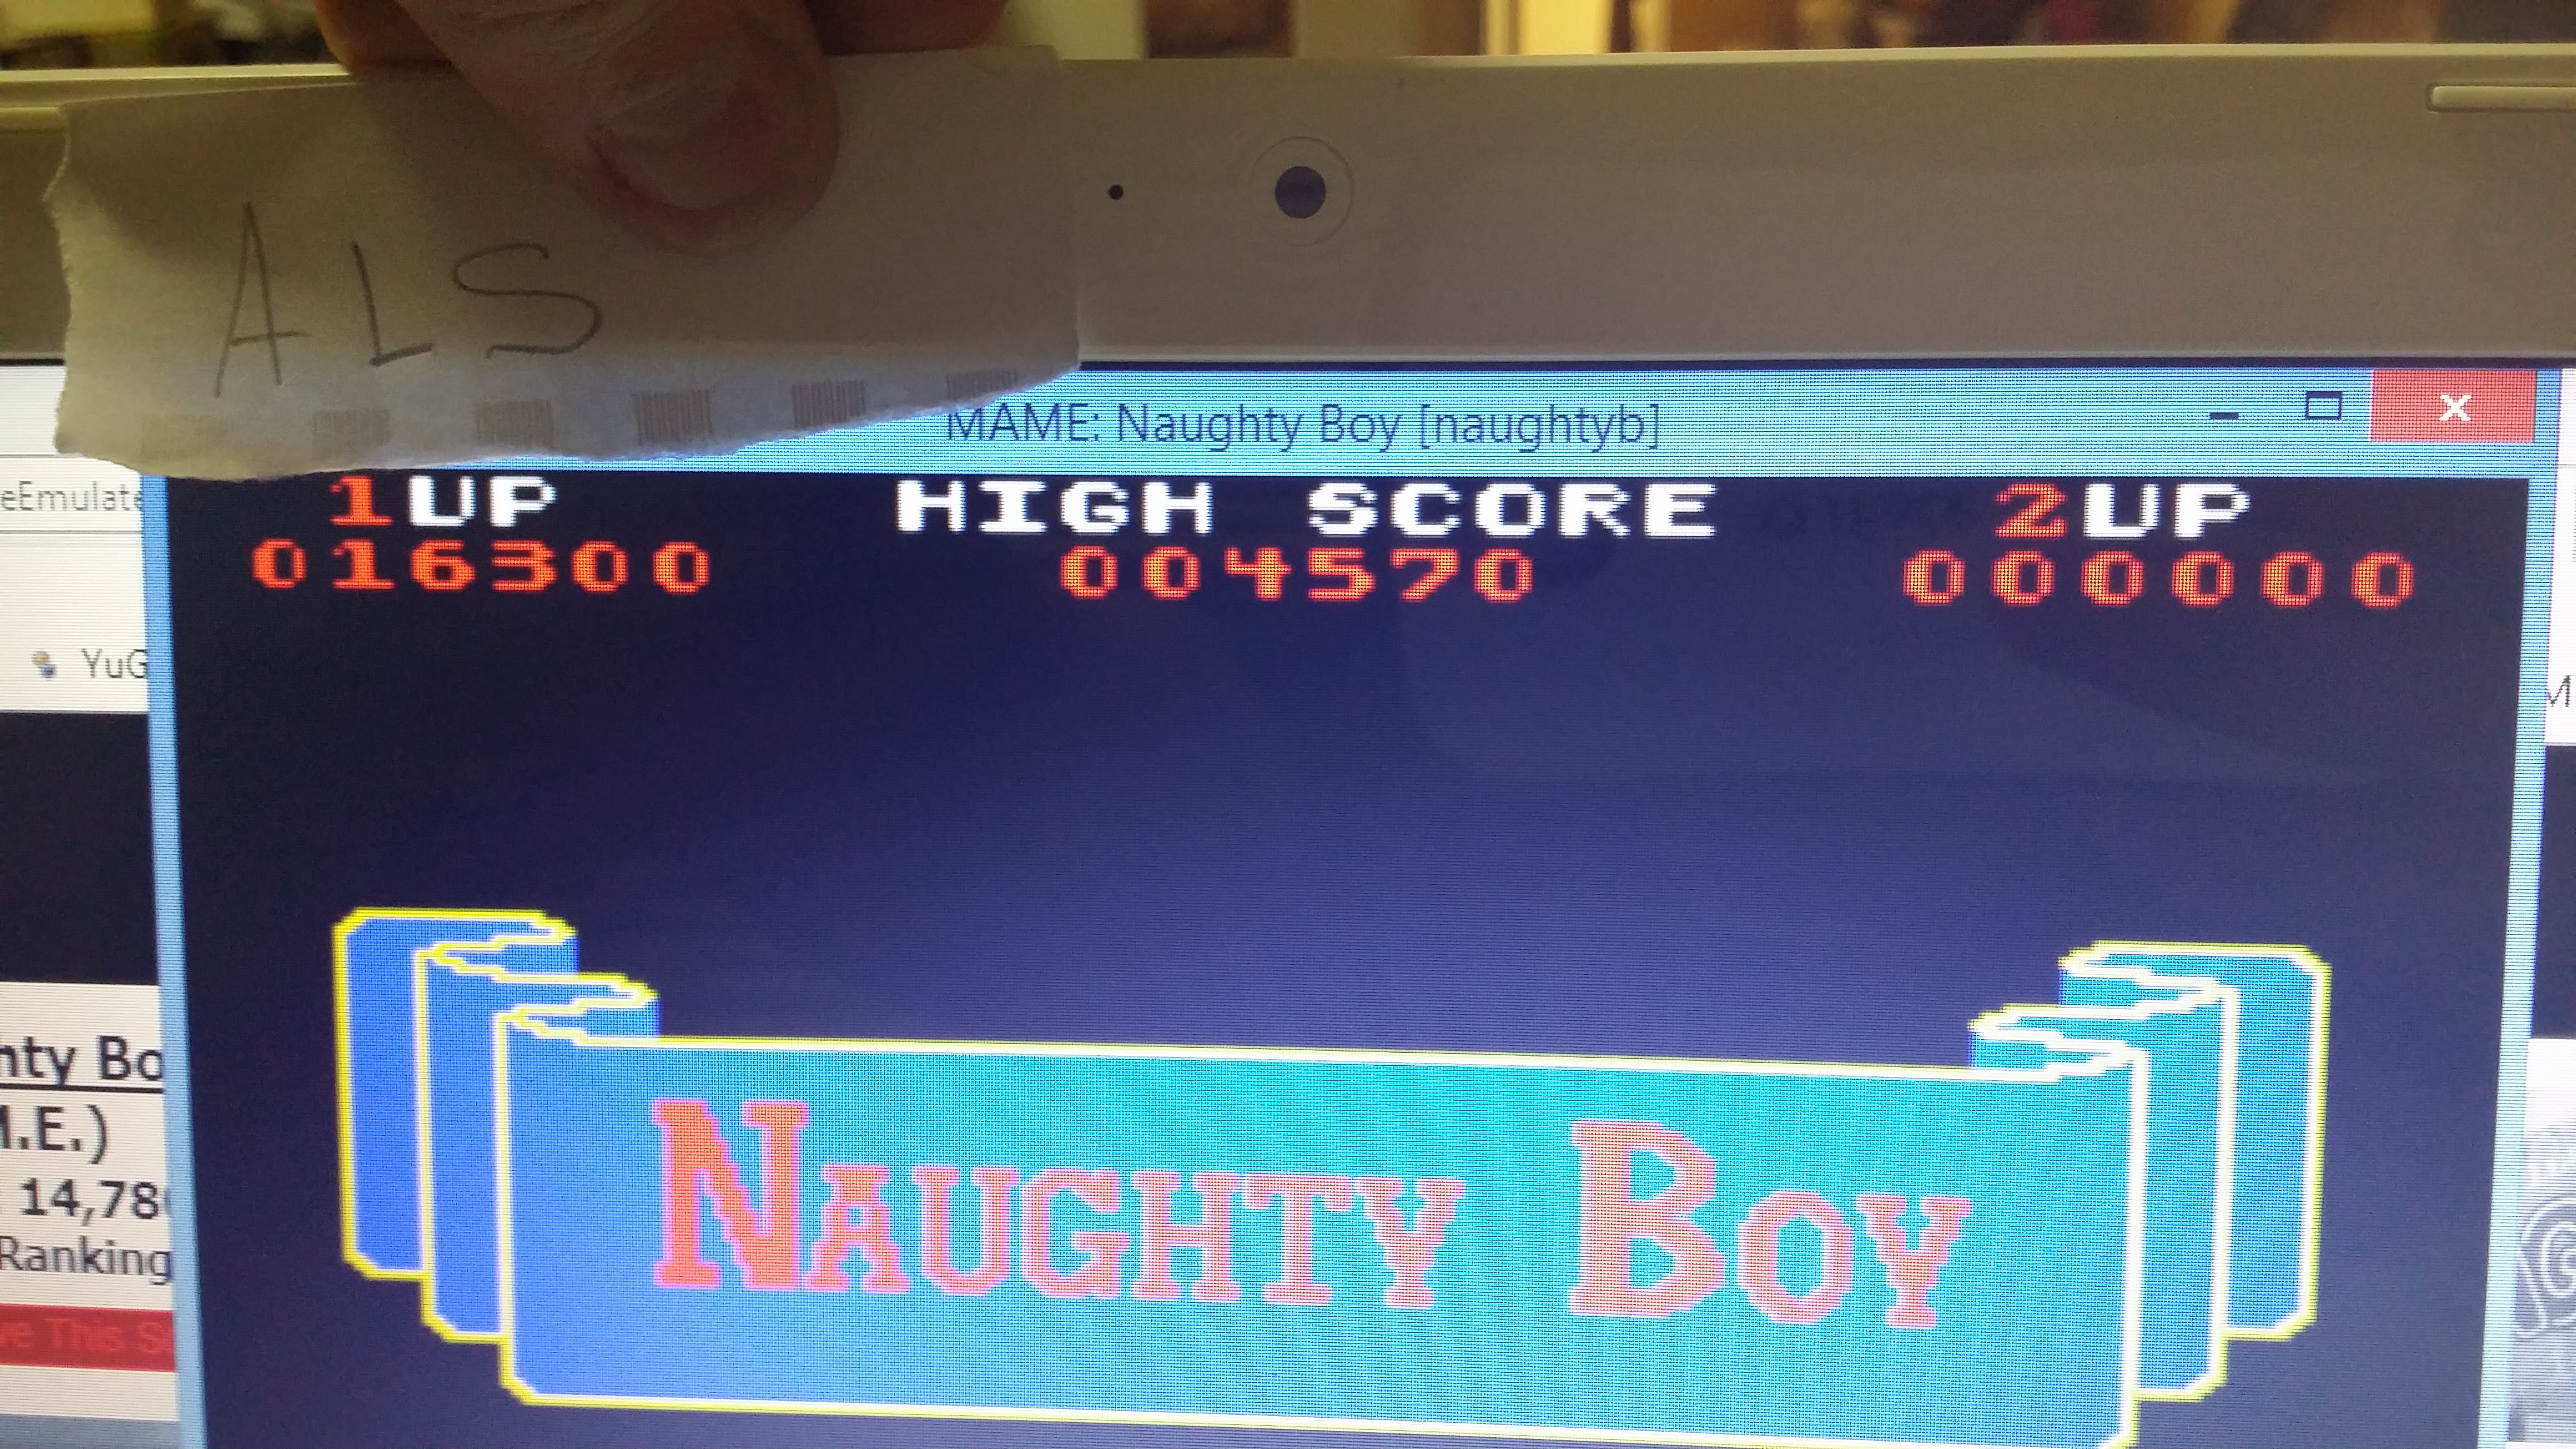 Naughty Boy [naughtyb] 16,300 points